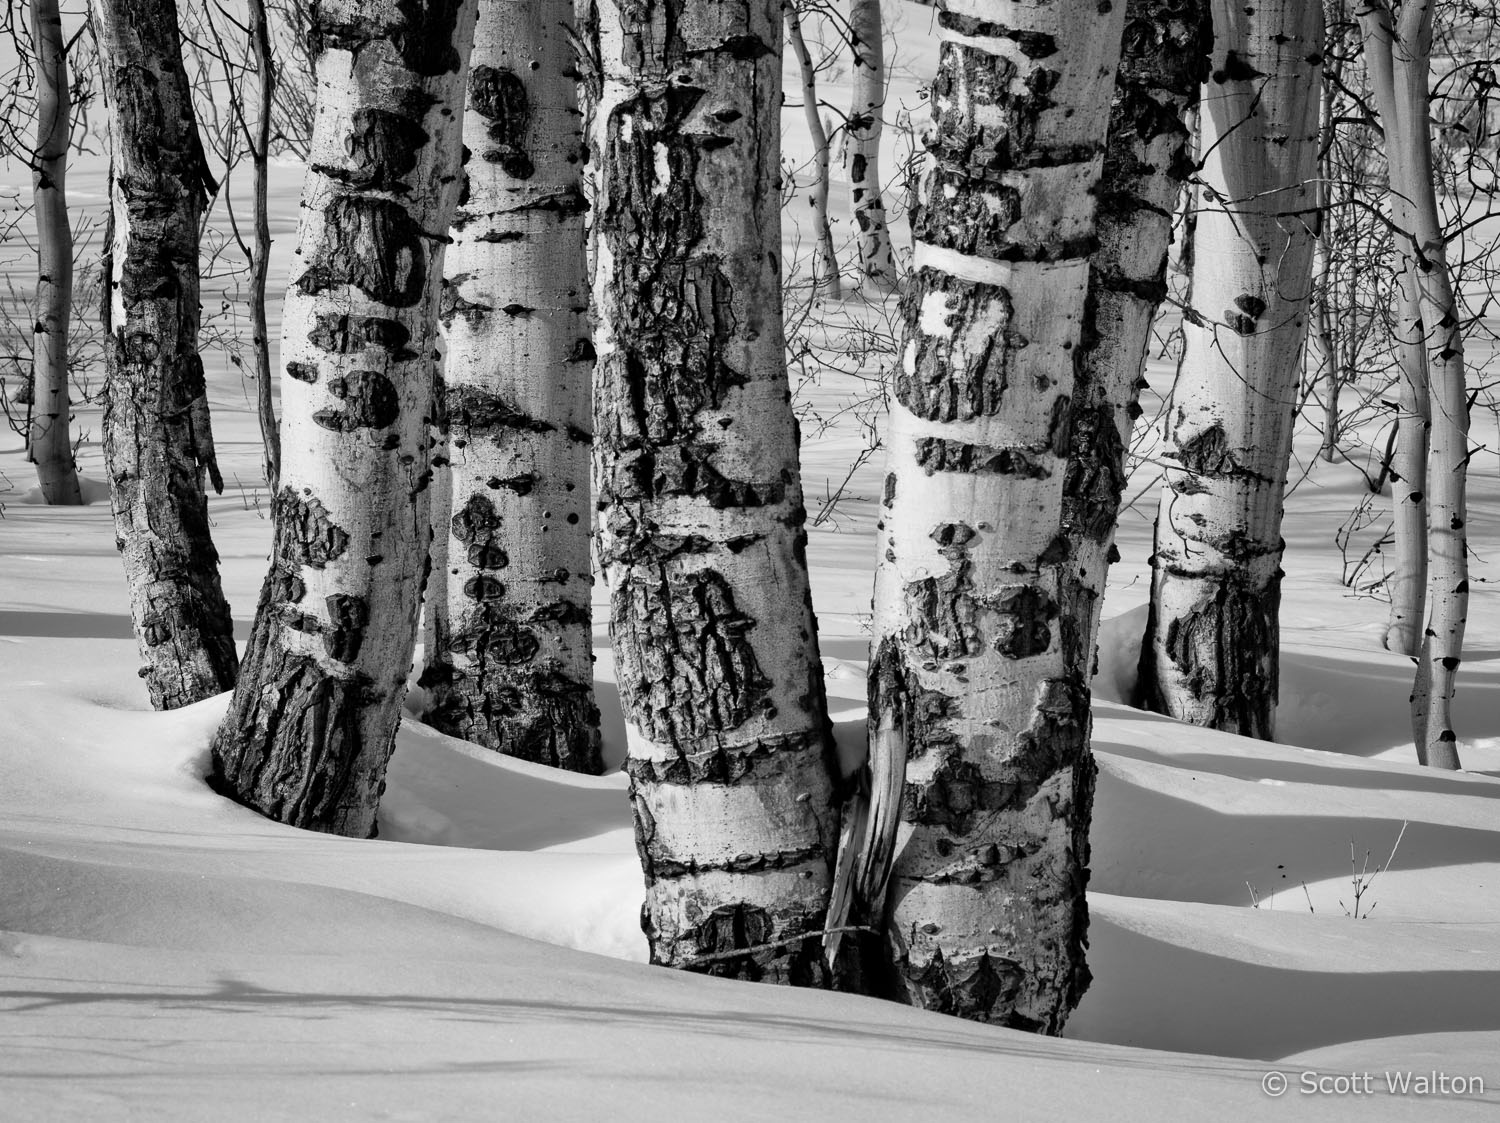 aspen-trees-snow-jackson-hole-wyoming-grand-tetons-ae.jpg